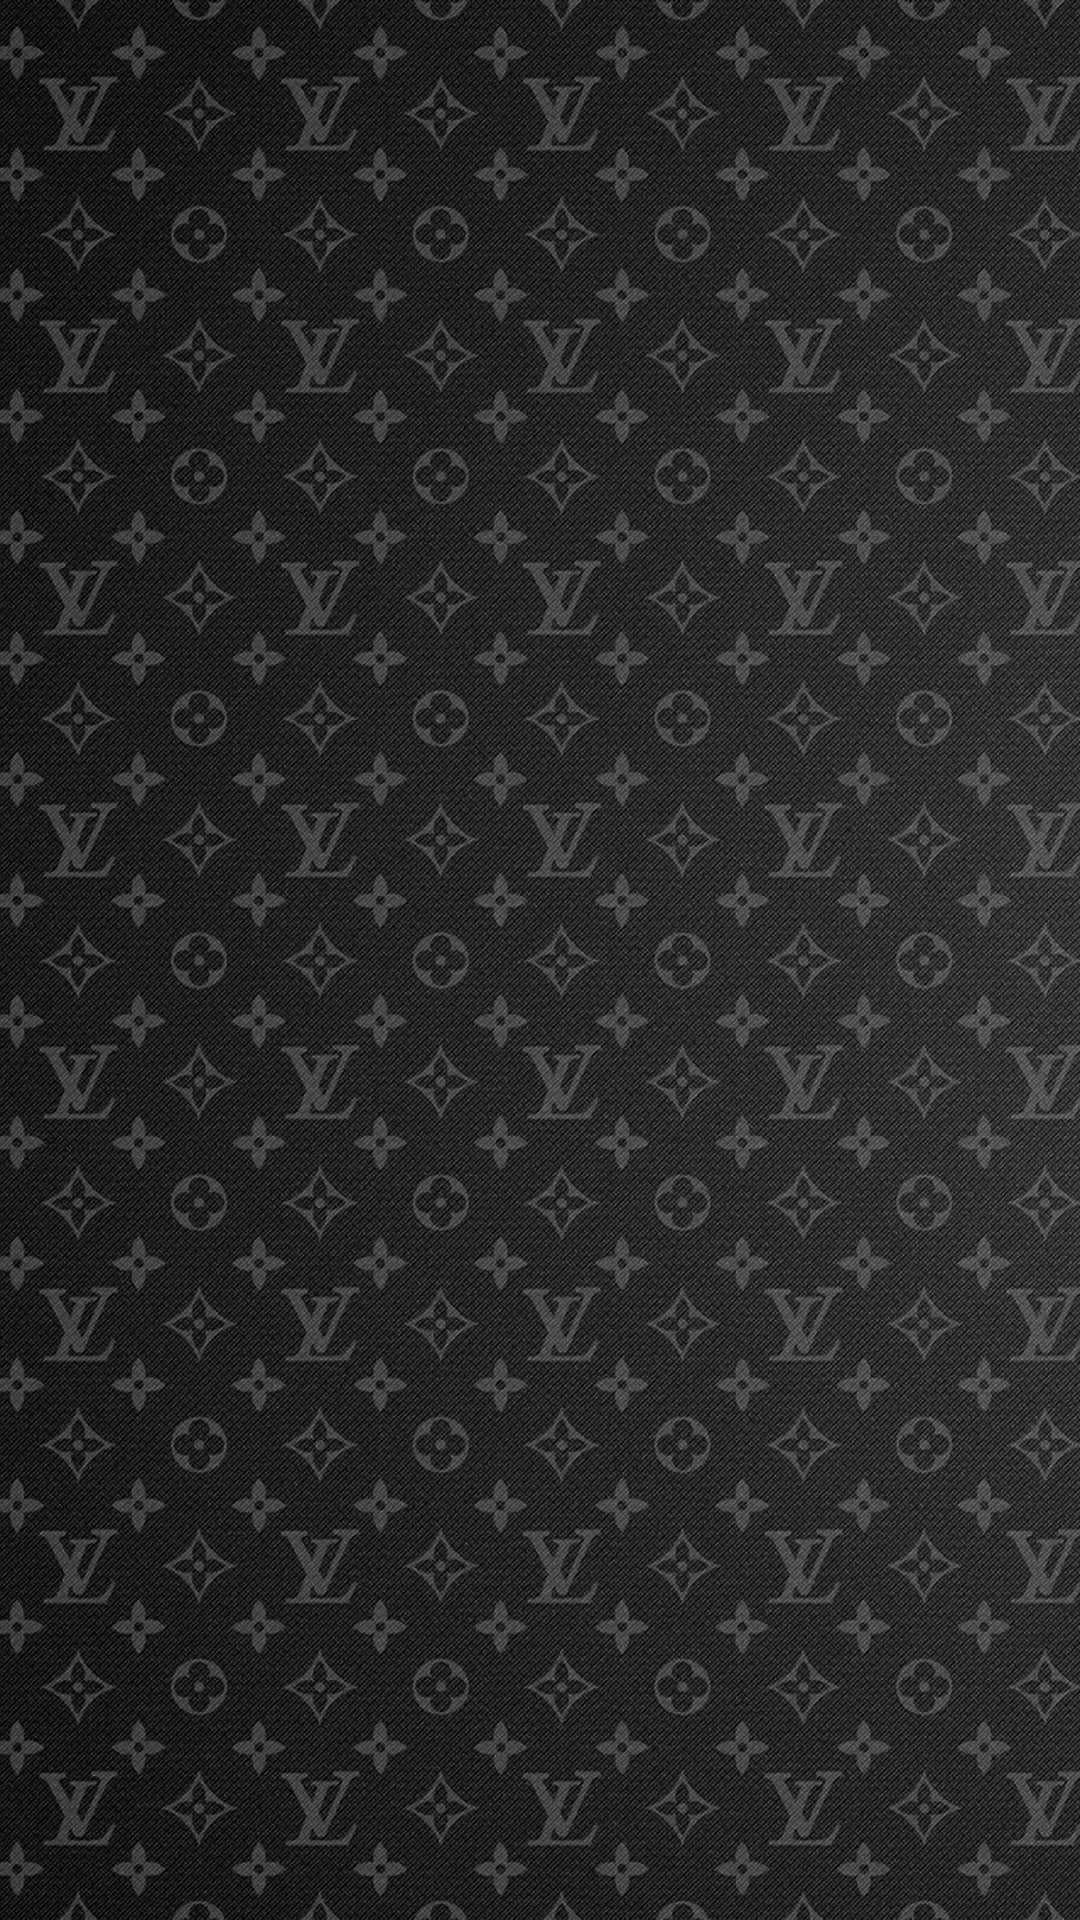 An Exclusive Louis Vuitton Desktop Wallpaper